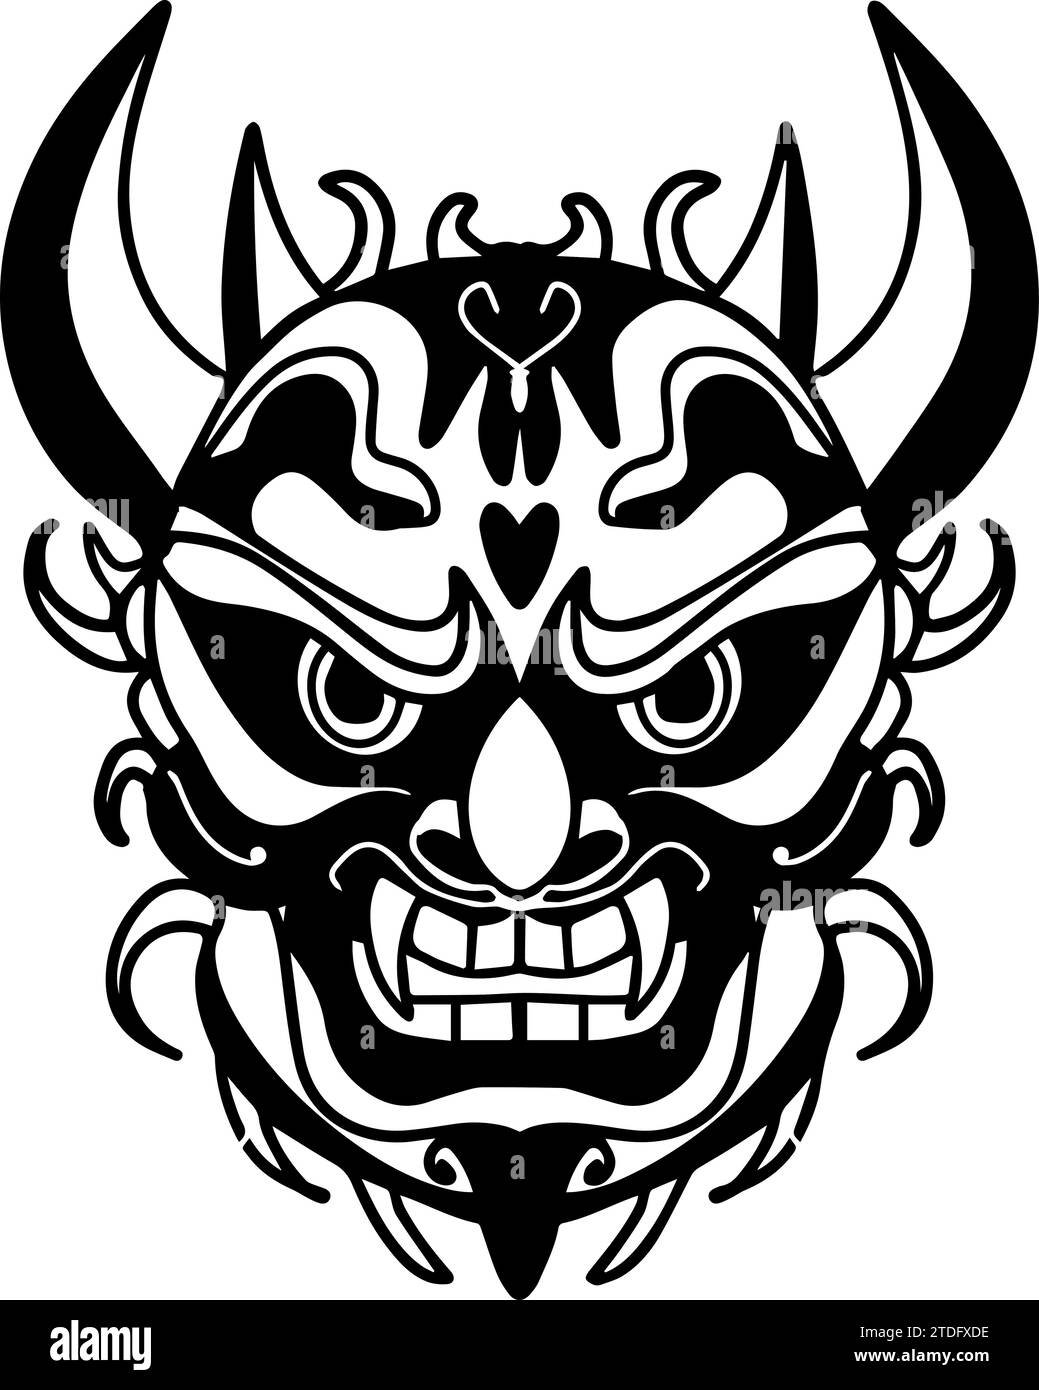 Japanisches Tattoo mit Dämon Hannya Maske, Tattoos oder Print auf einem T-Shirt. Ooni Maske Vektor Illustration Design mit dunkler Kunst Stil Stock Vektor